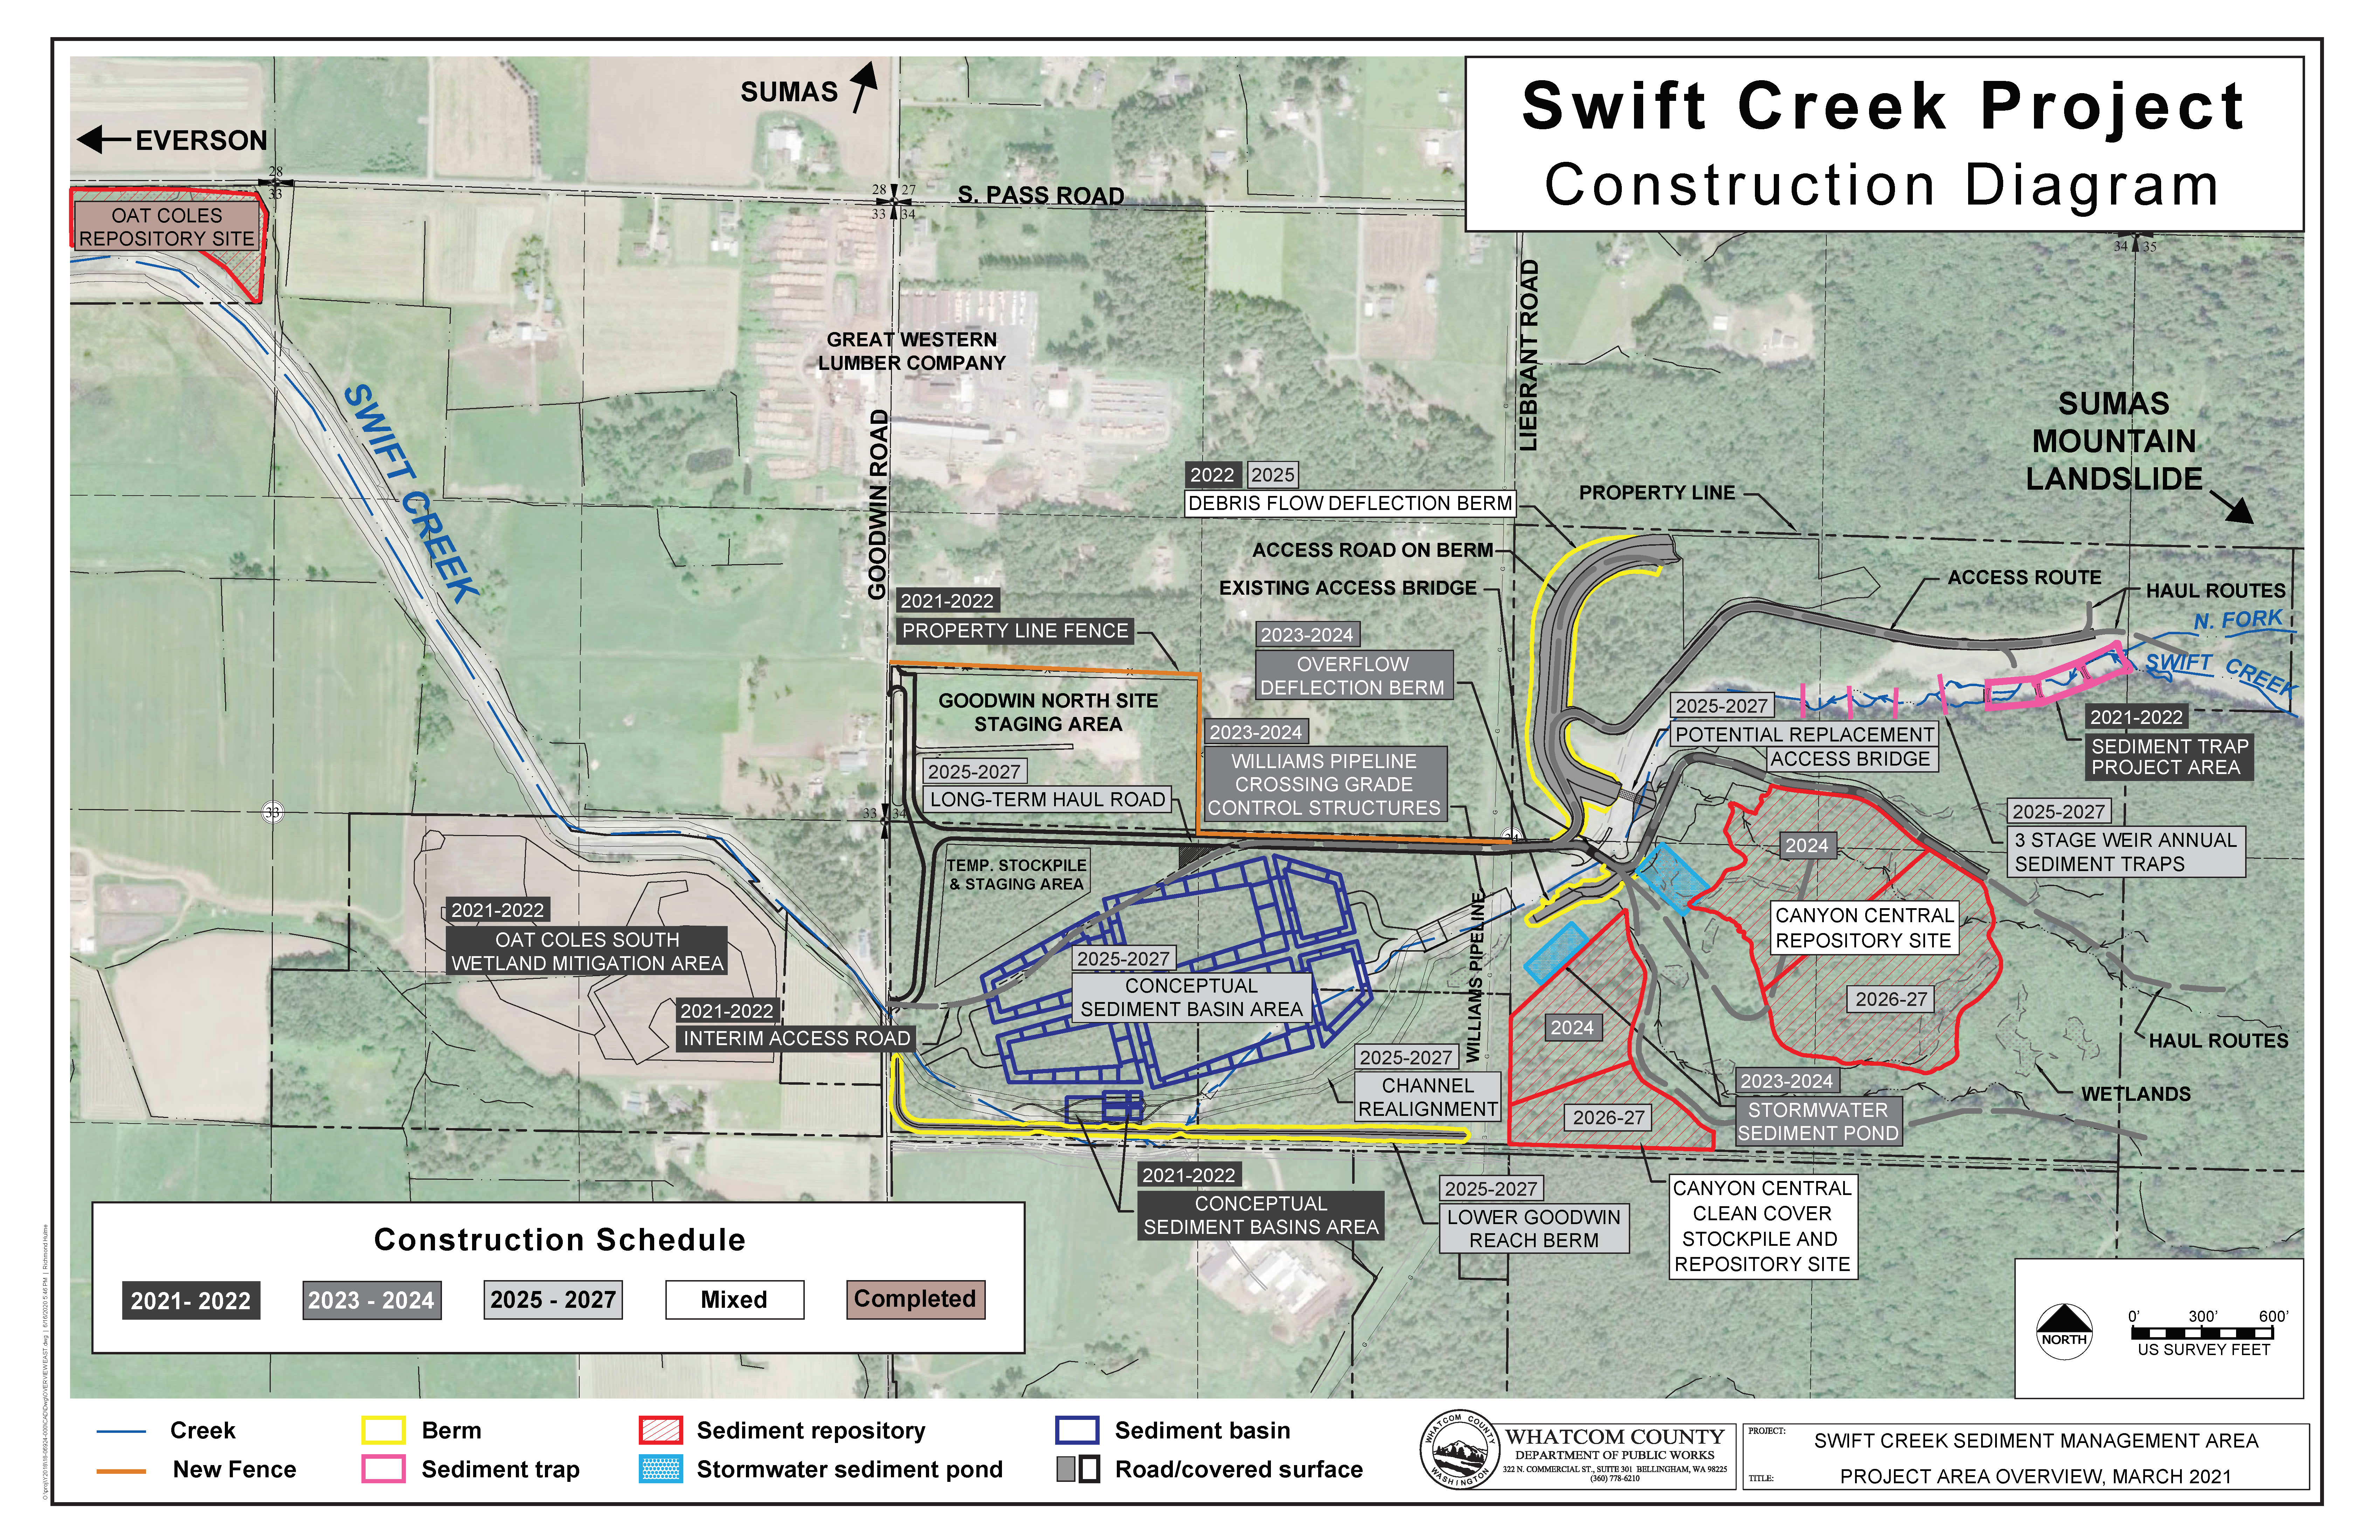 Swift Creek construction diagram. See caption to download text description.